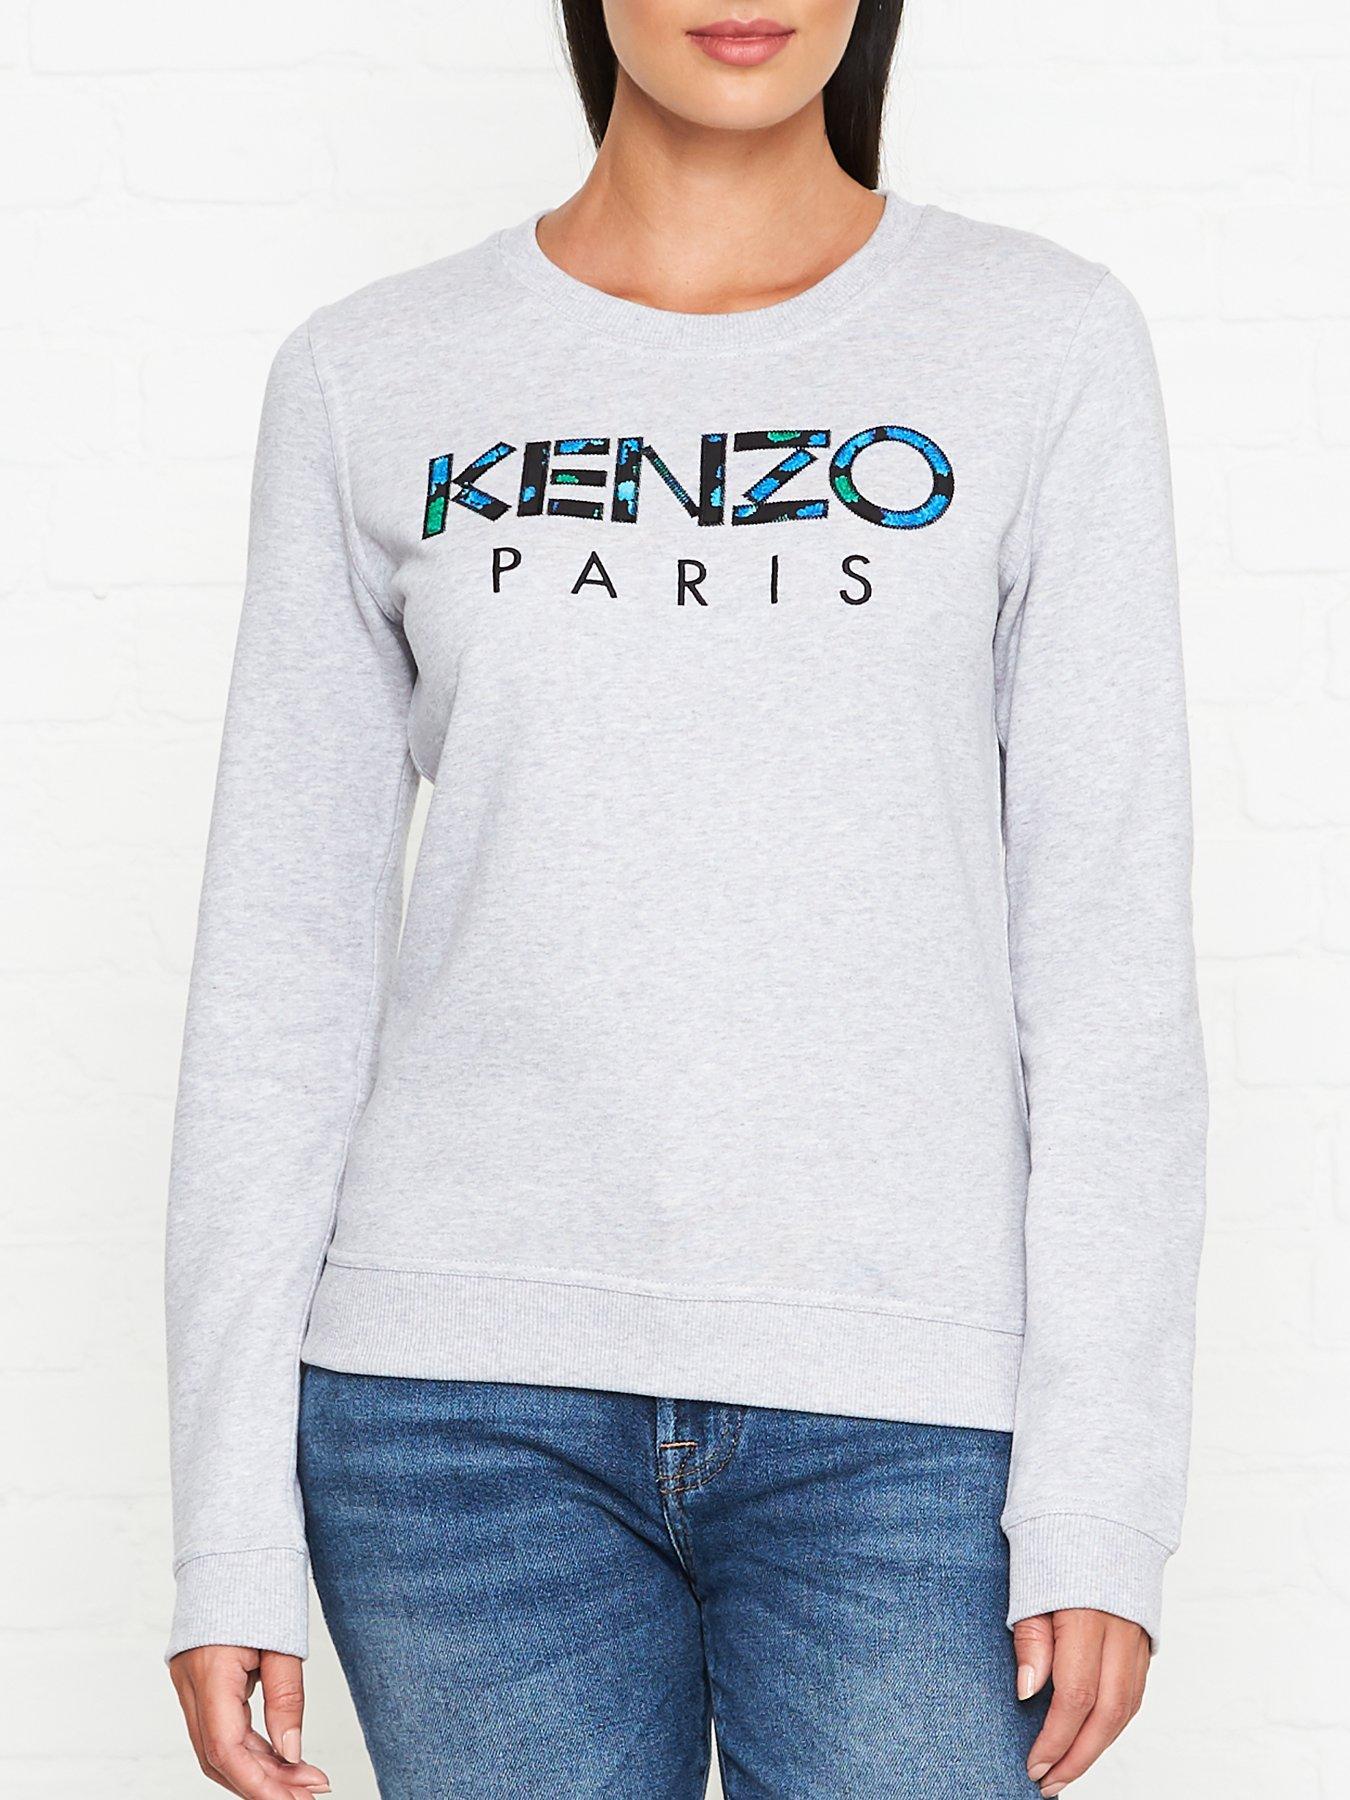 Kenzo Paris Sweatshirt - Grey | very.co.uk